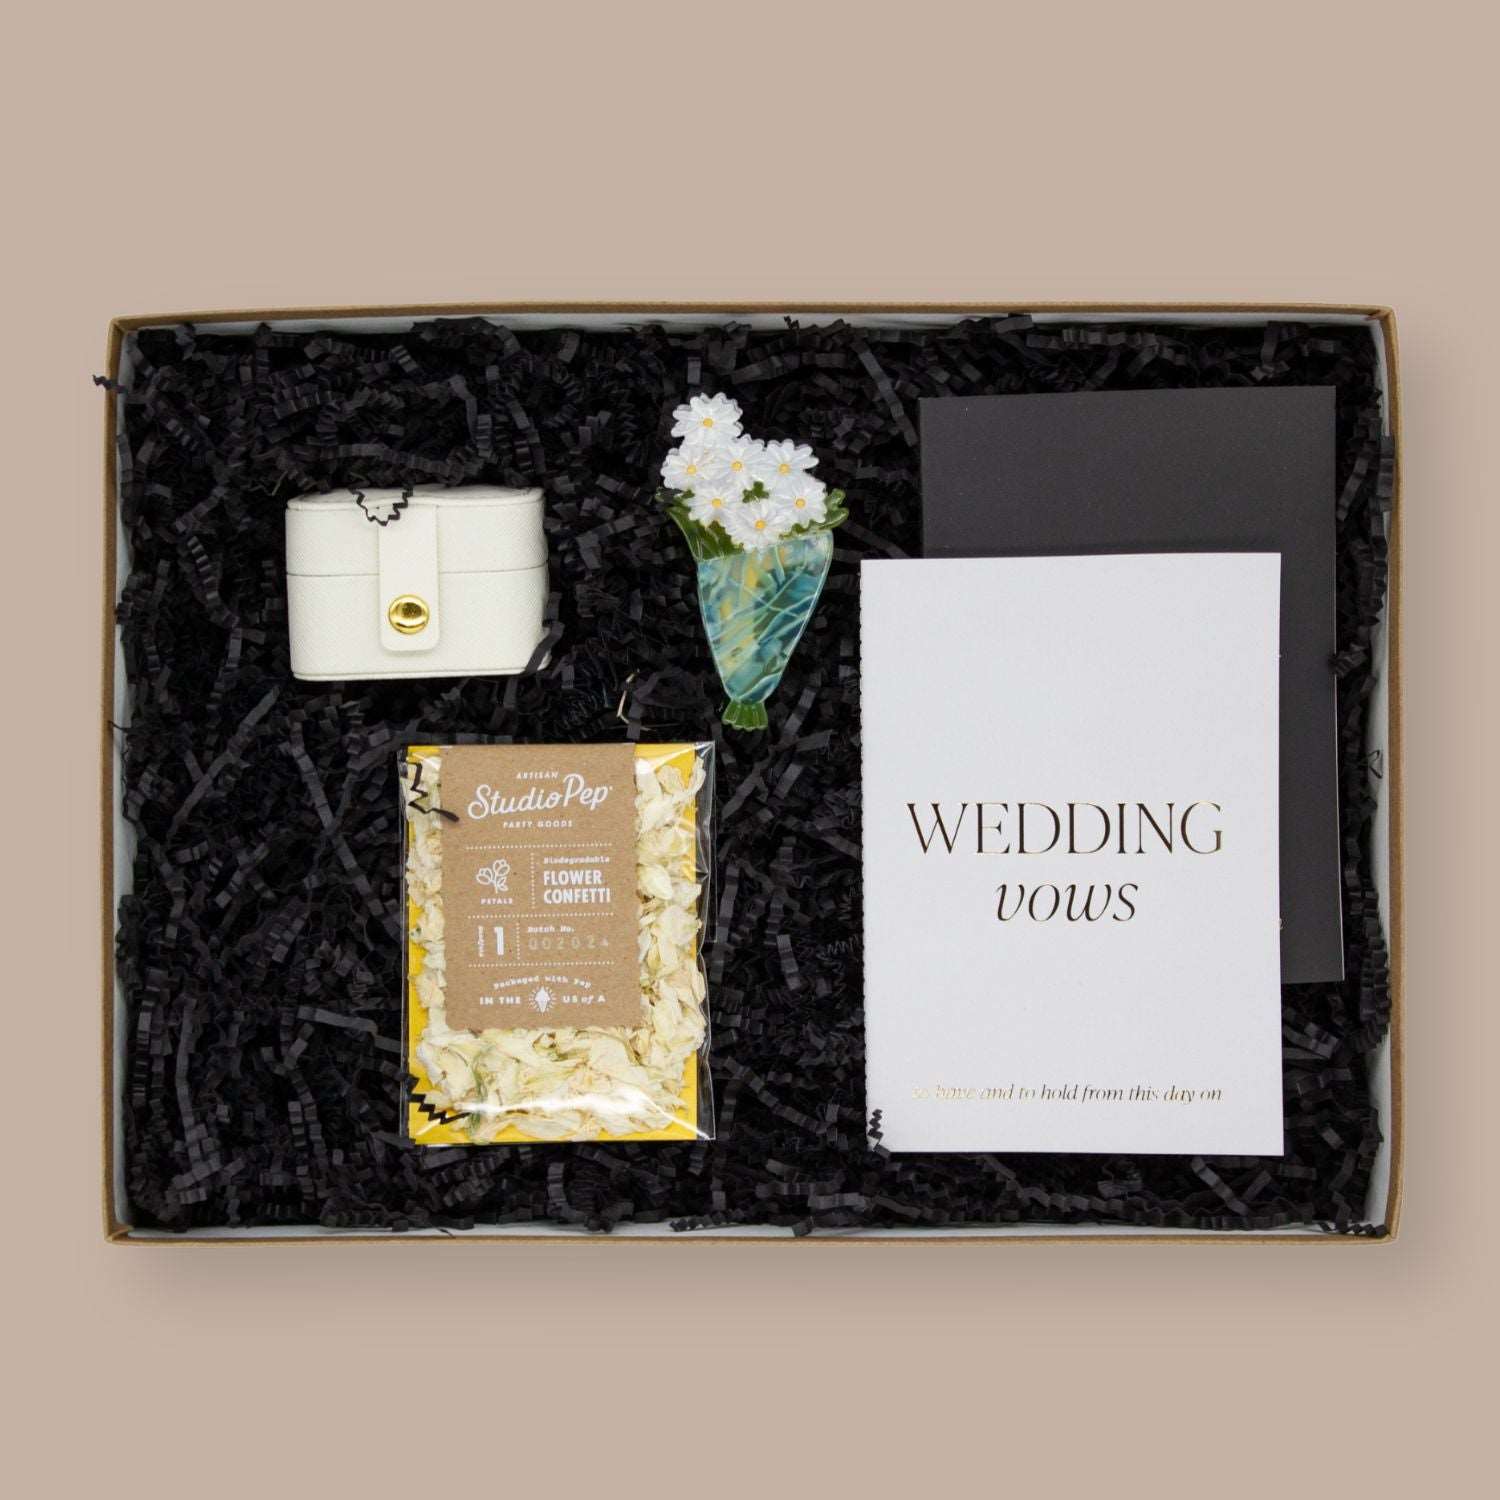 Bridal Vows Gift Box - KINSHIP GIFT - Engagement Gift Box - KINSHIP GIFT -  - Pittsburgh - gift - boxes - gift - baskets